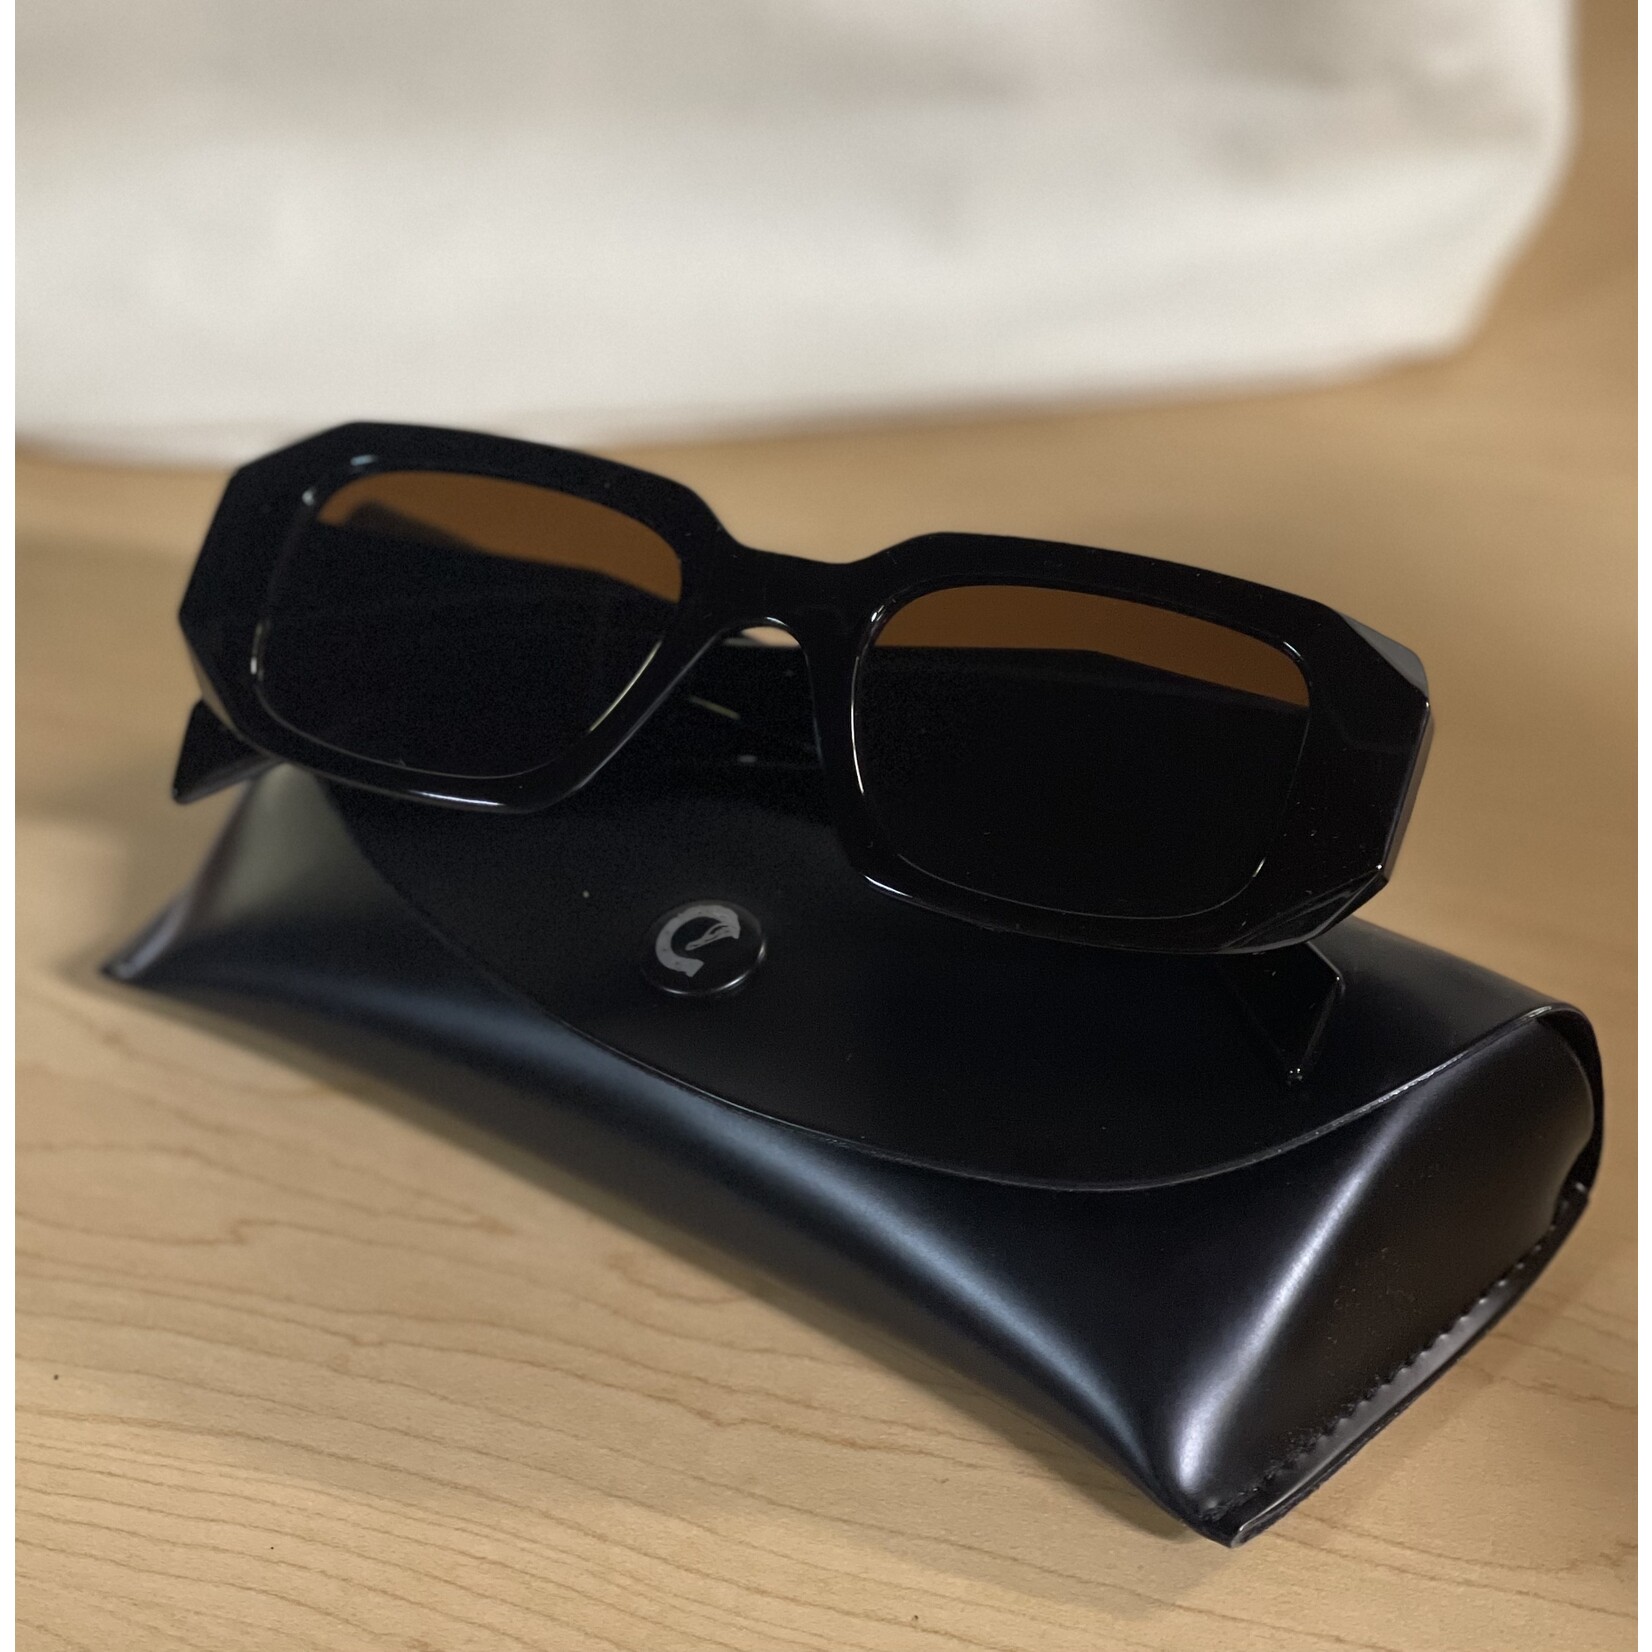 Anytime Tack Anytime Tack Luxury Designer Logo UV400 Sunglasses